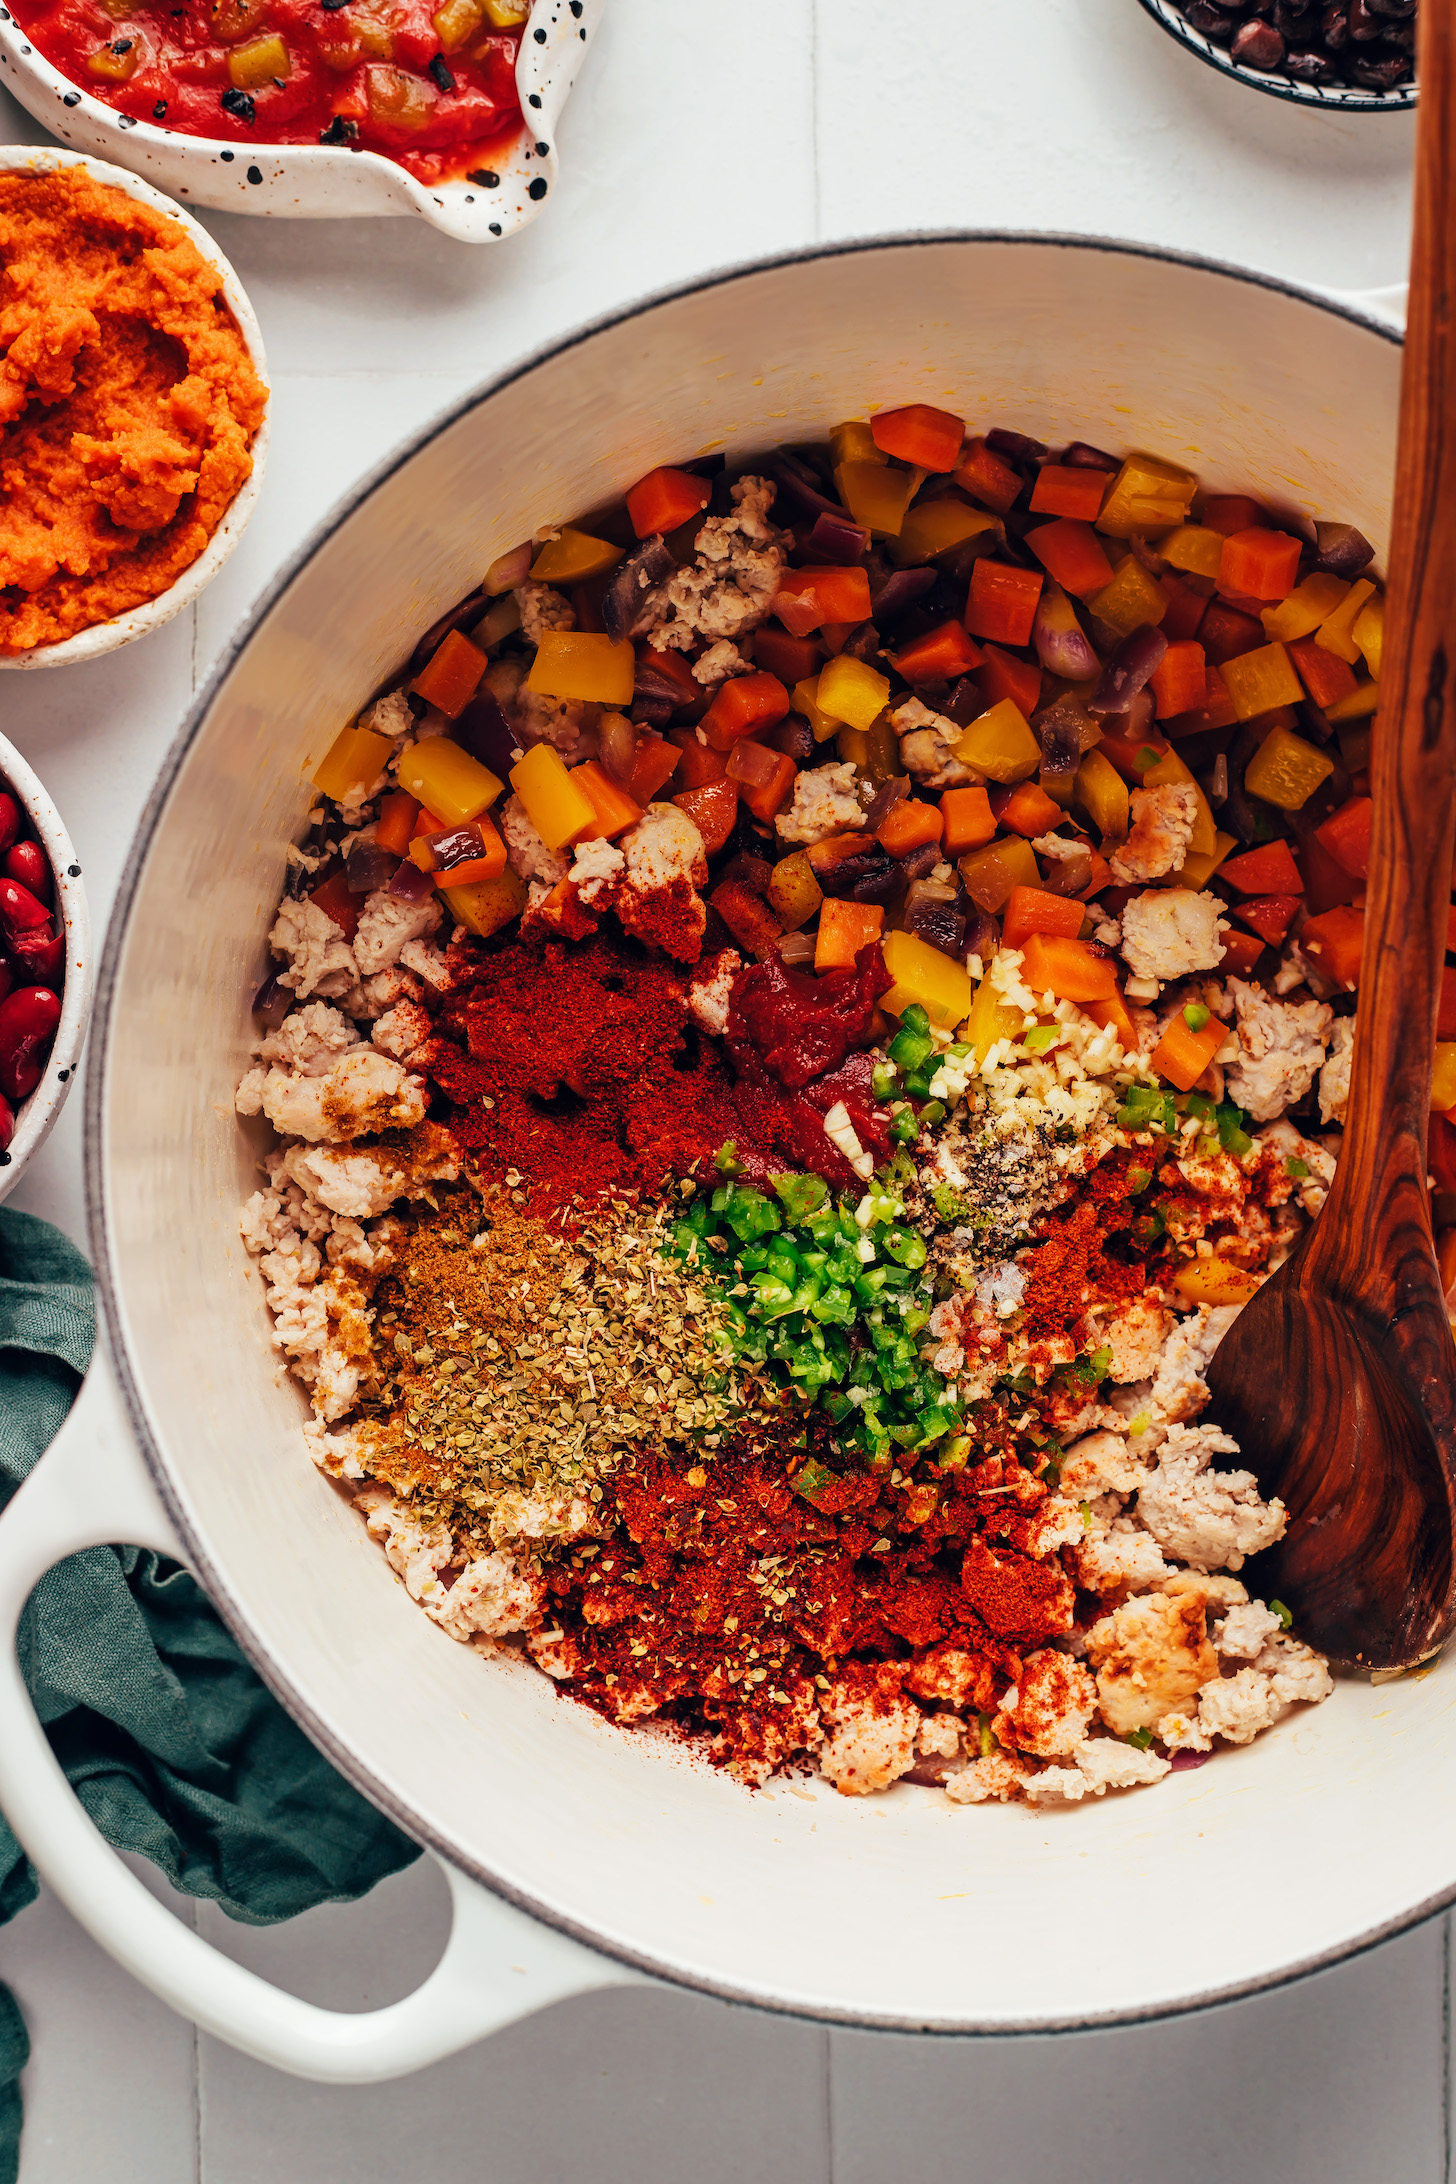 Pot with ground turkey, sautéed veggies, and spices